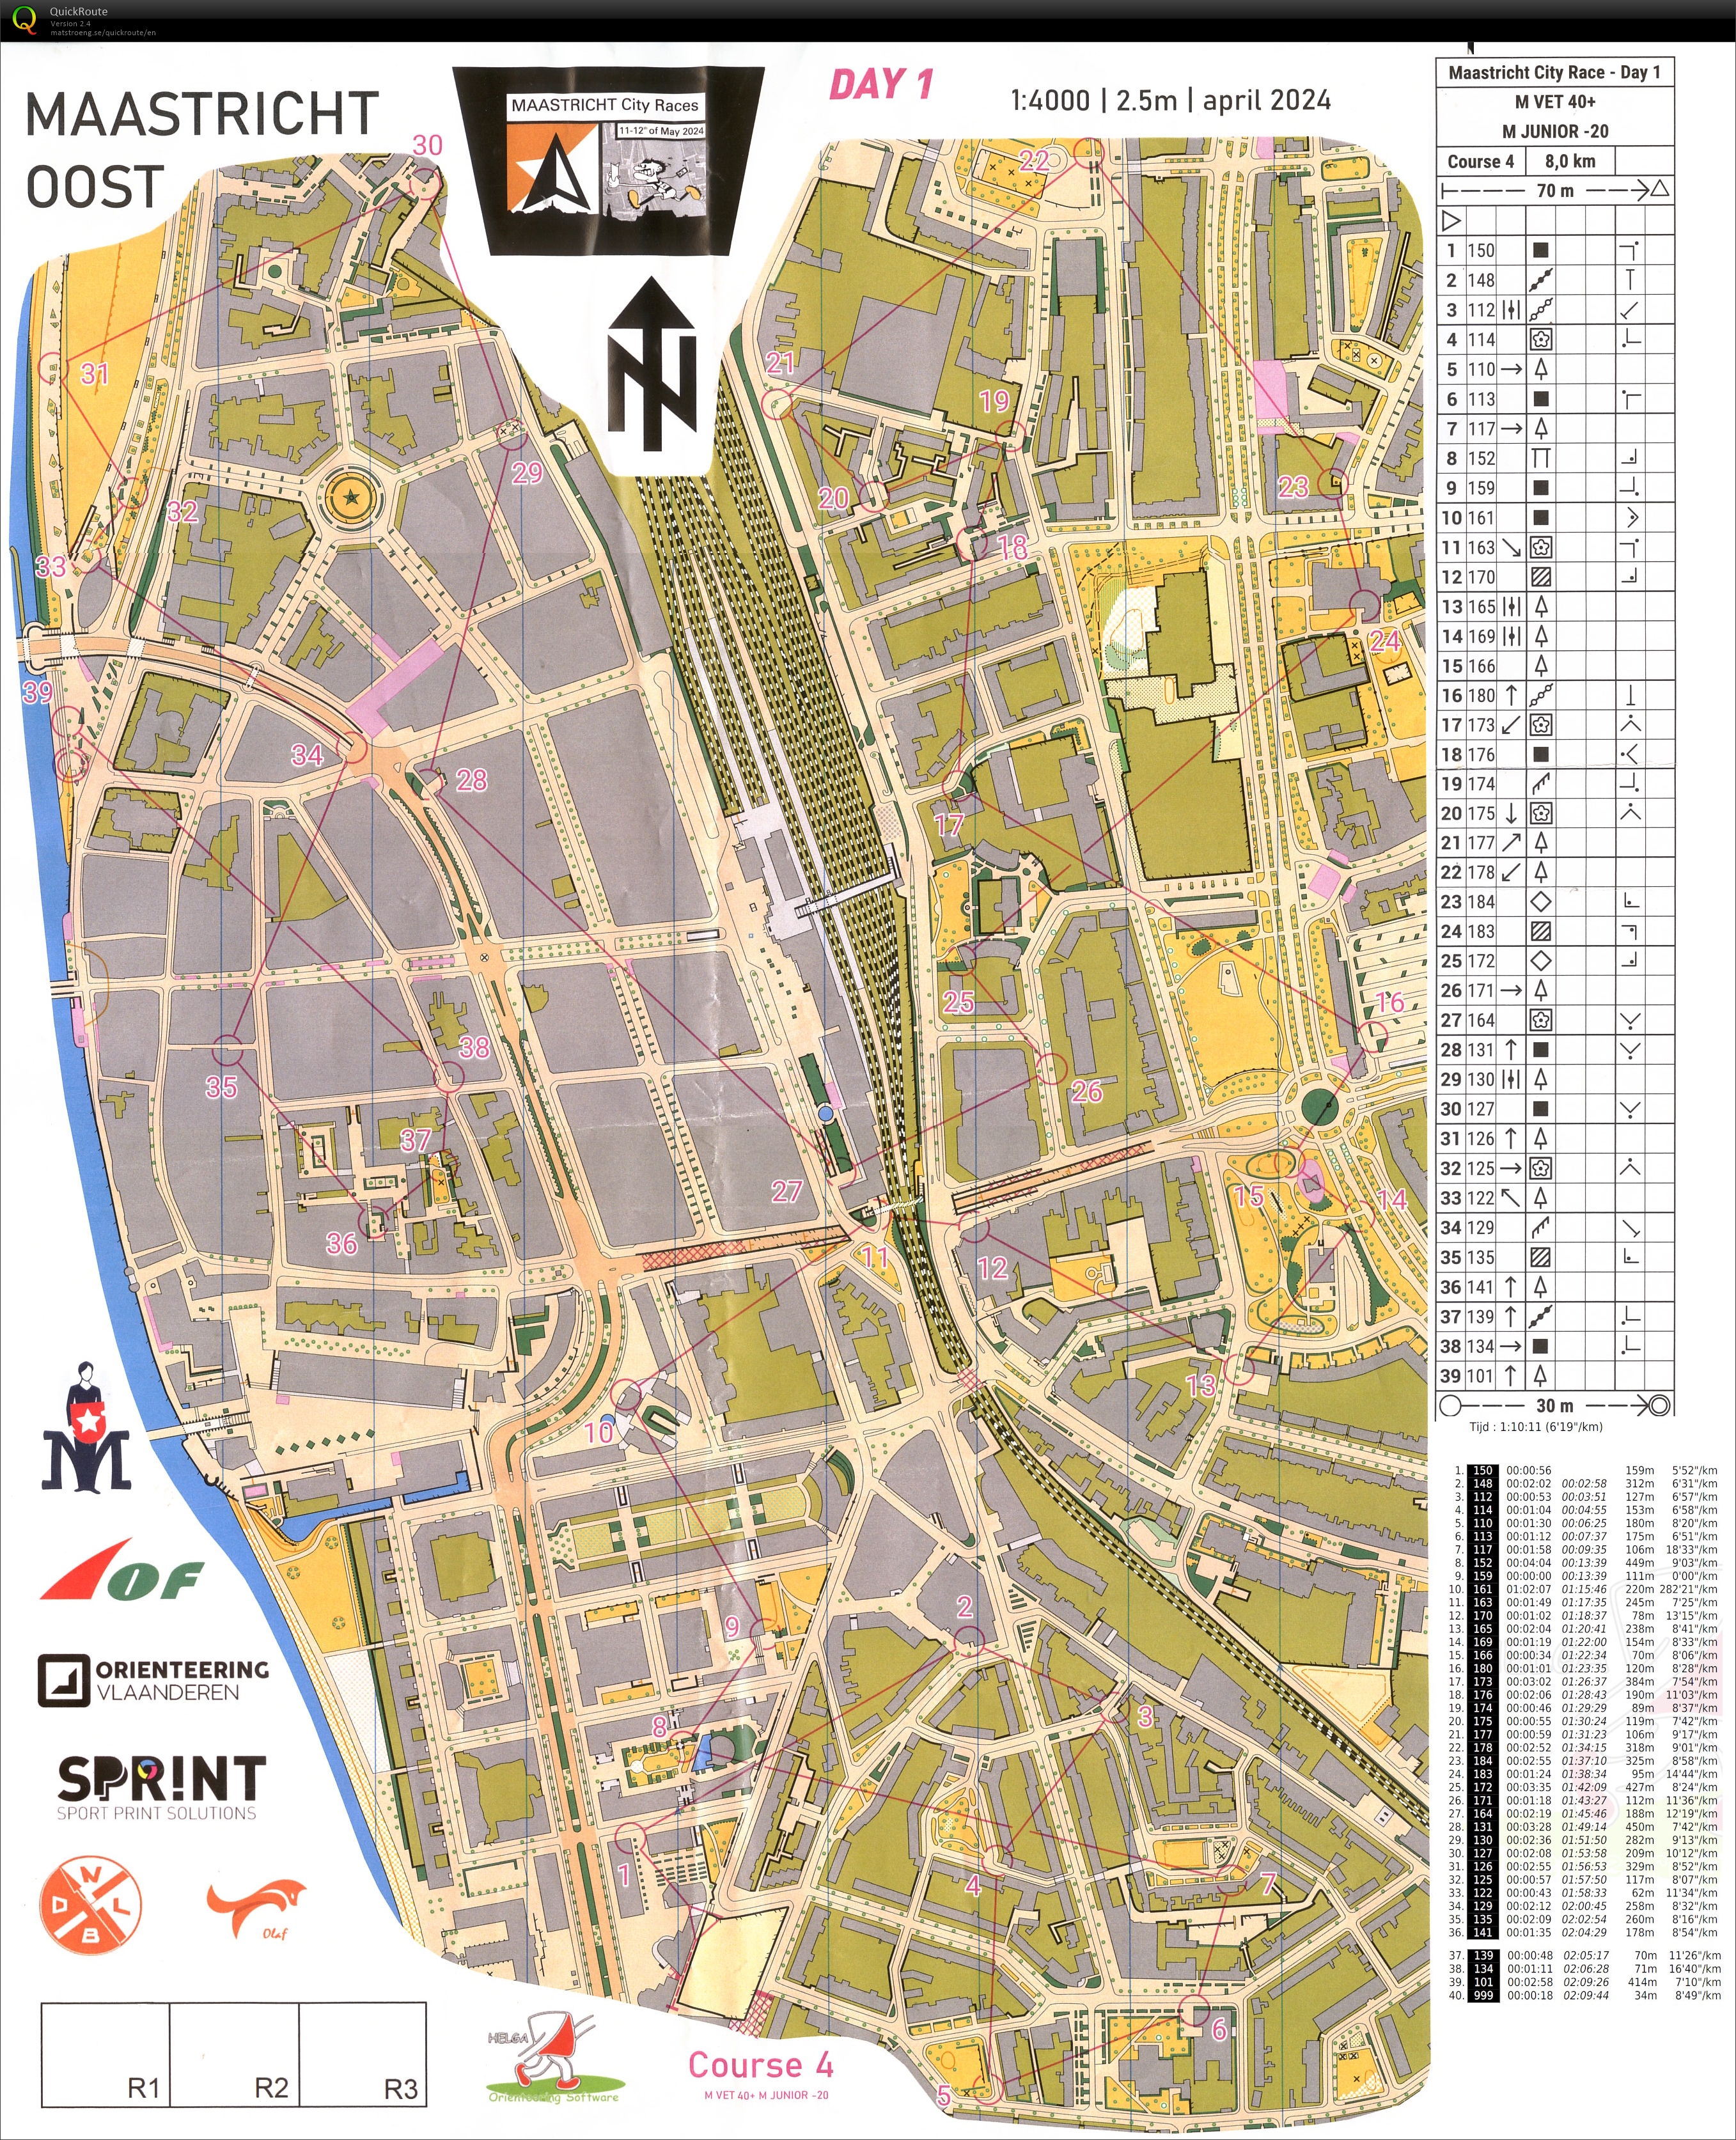 Maastricht City races (11/05/2024)